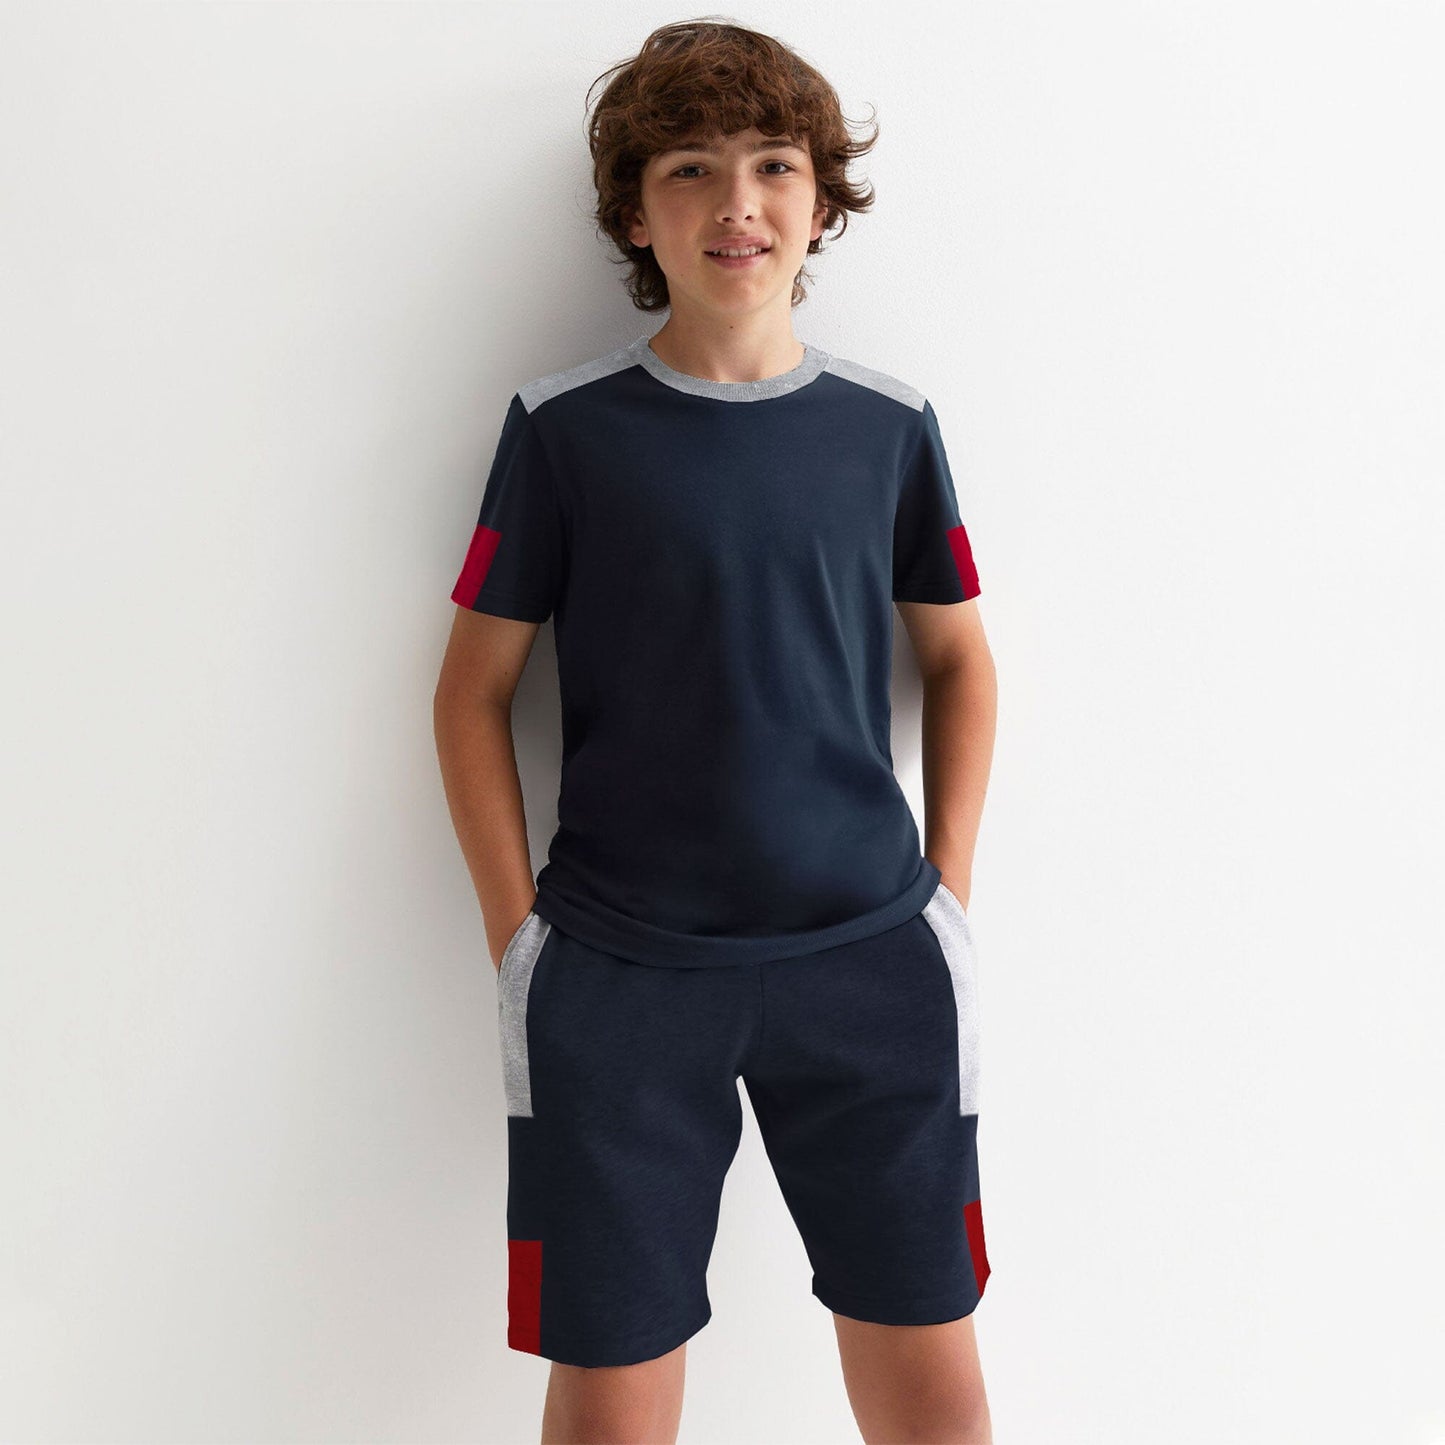 Kid's Liege Contrast Panel Style Soccer Suit Boy's Suit Set Minhas Garments Navy 1 Years 